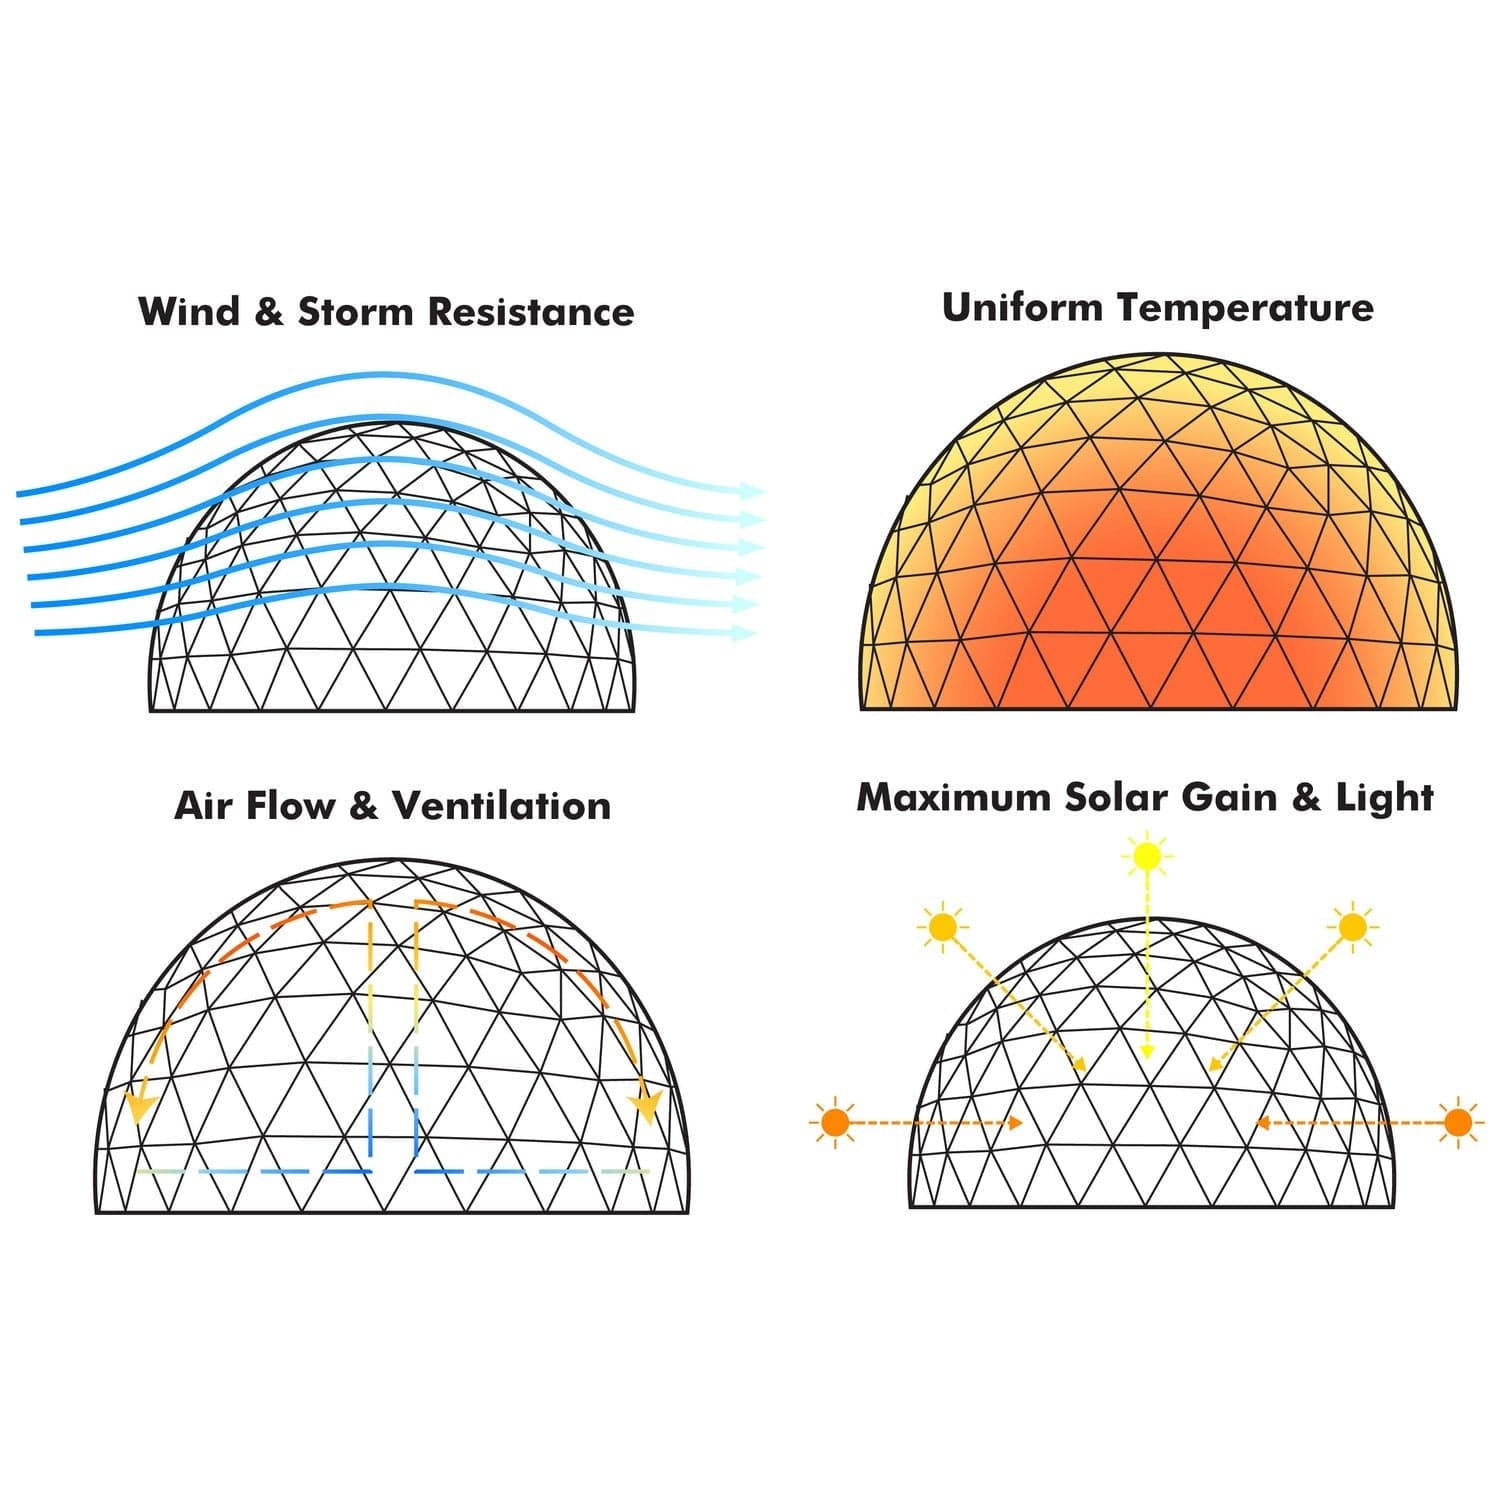 Lumen & Forge 16ft Geodesic Dome | Greenhouse Emporium